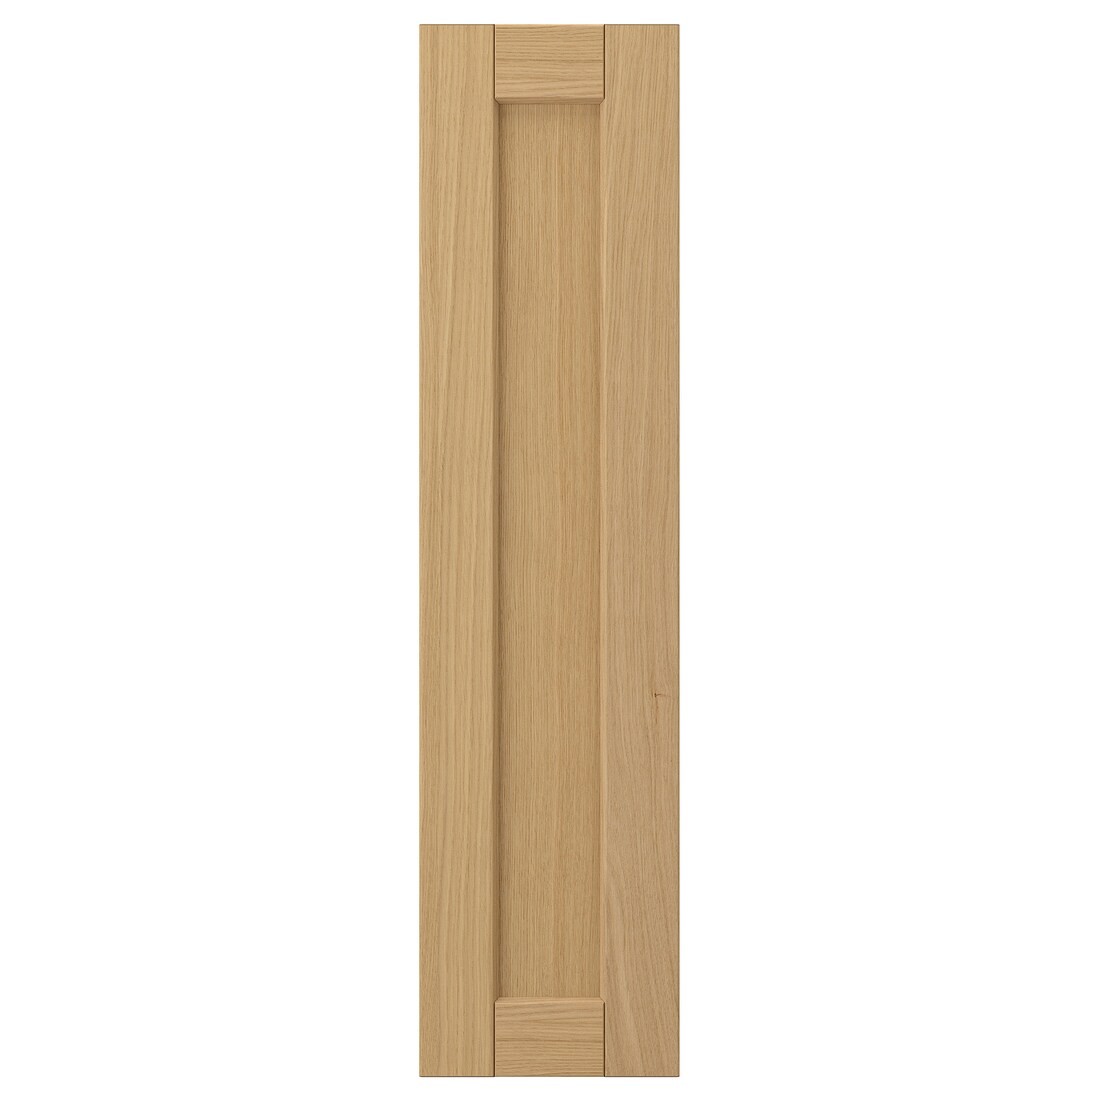 IKEA FORSBACKA Двері, дуб, 20x80 см 80565226 | 805.652.26